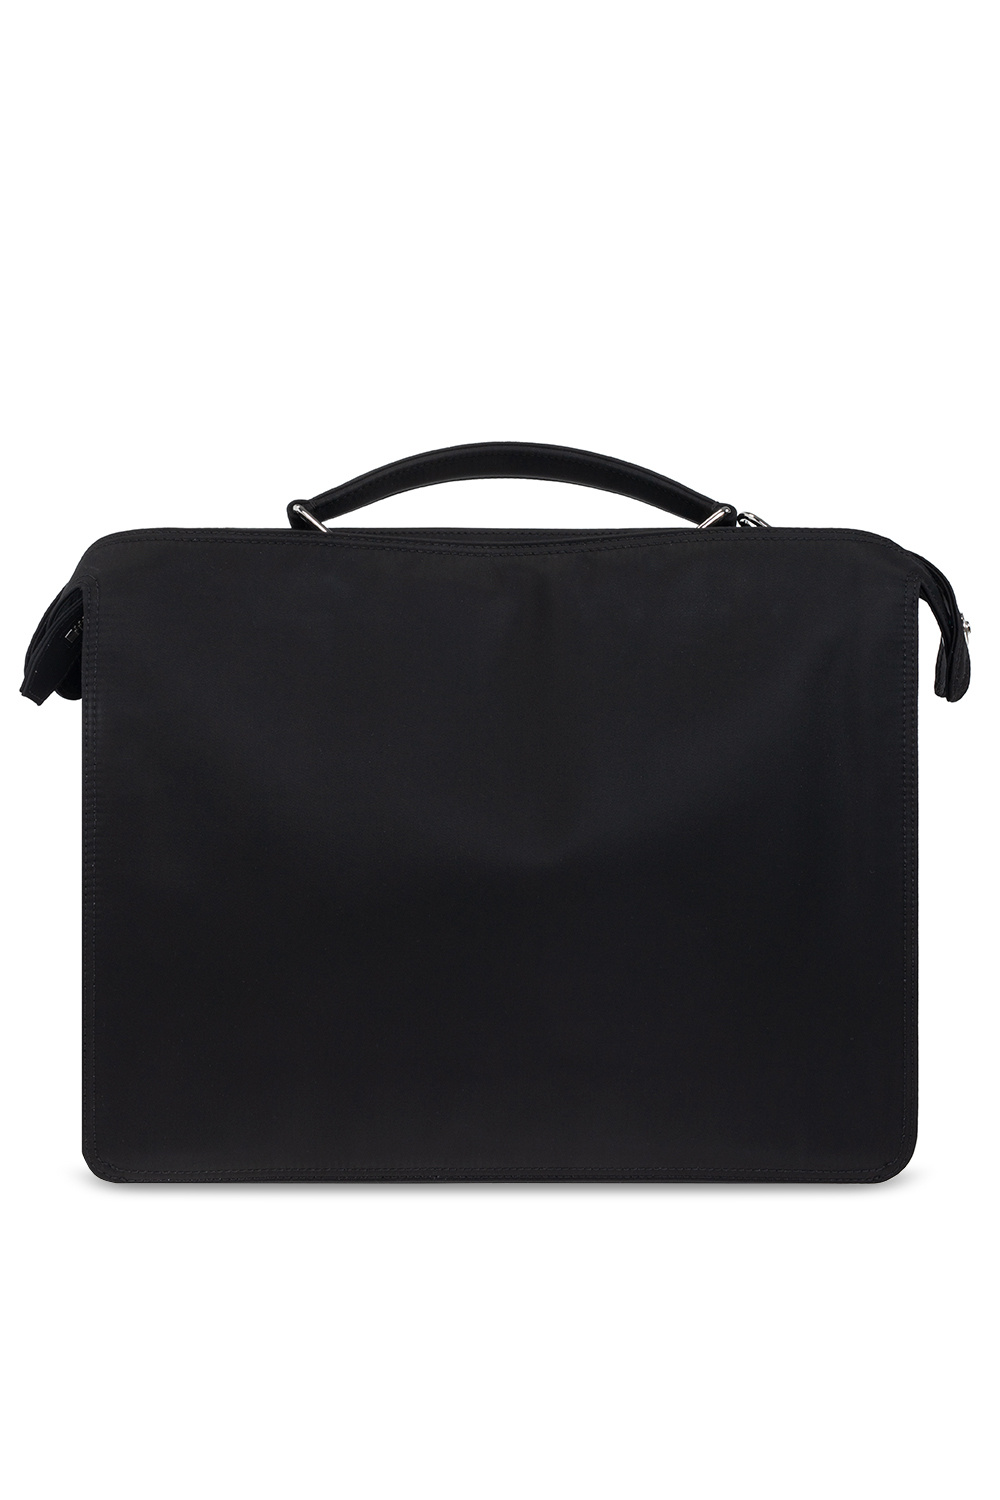 fendi pattern ‘Peekaboo IseeU Medium’ shoulder bag